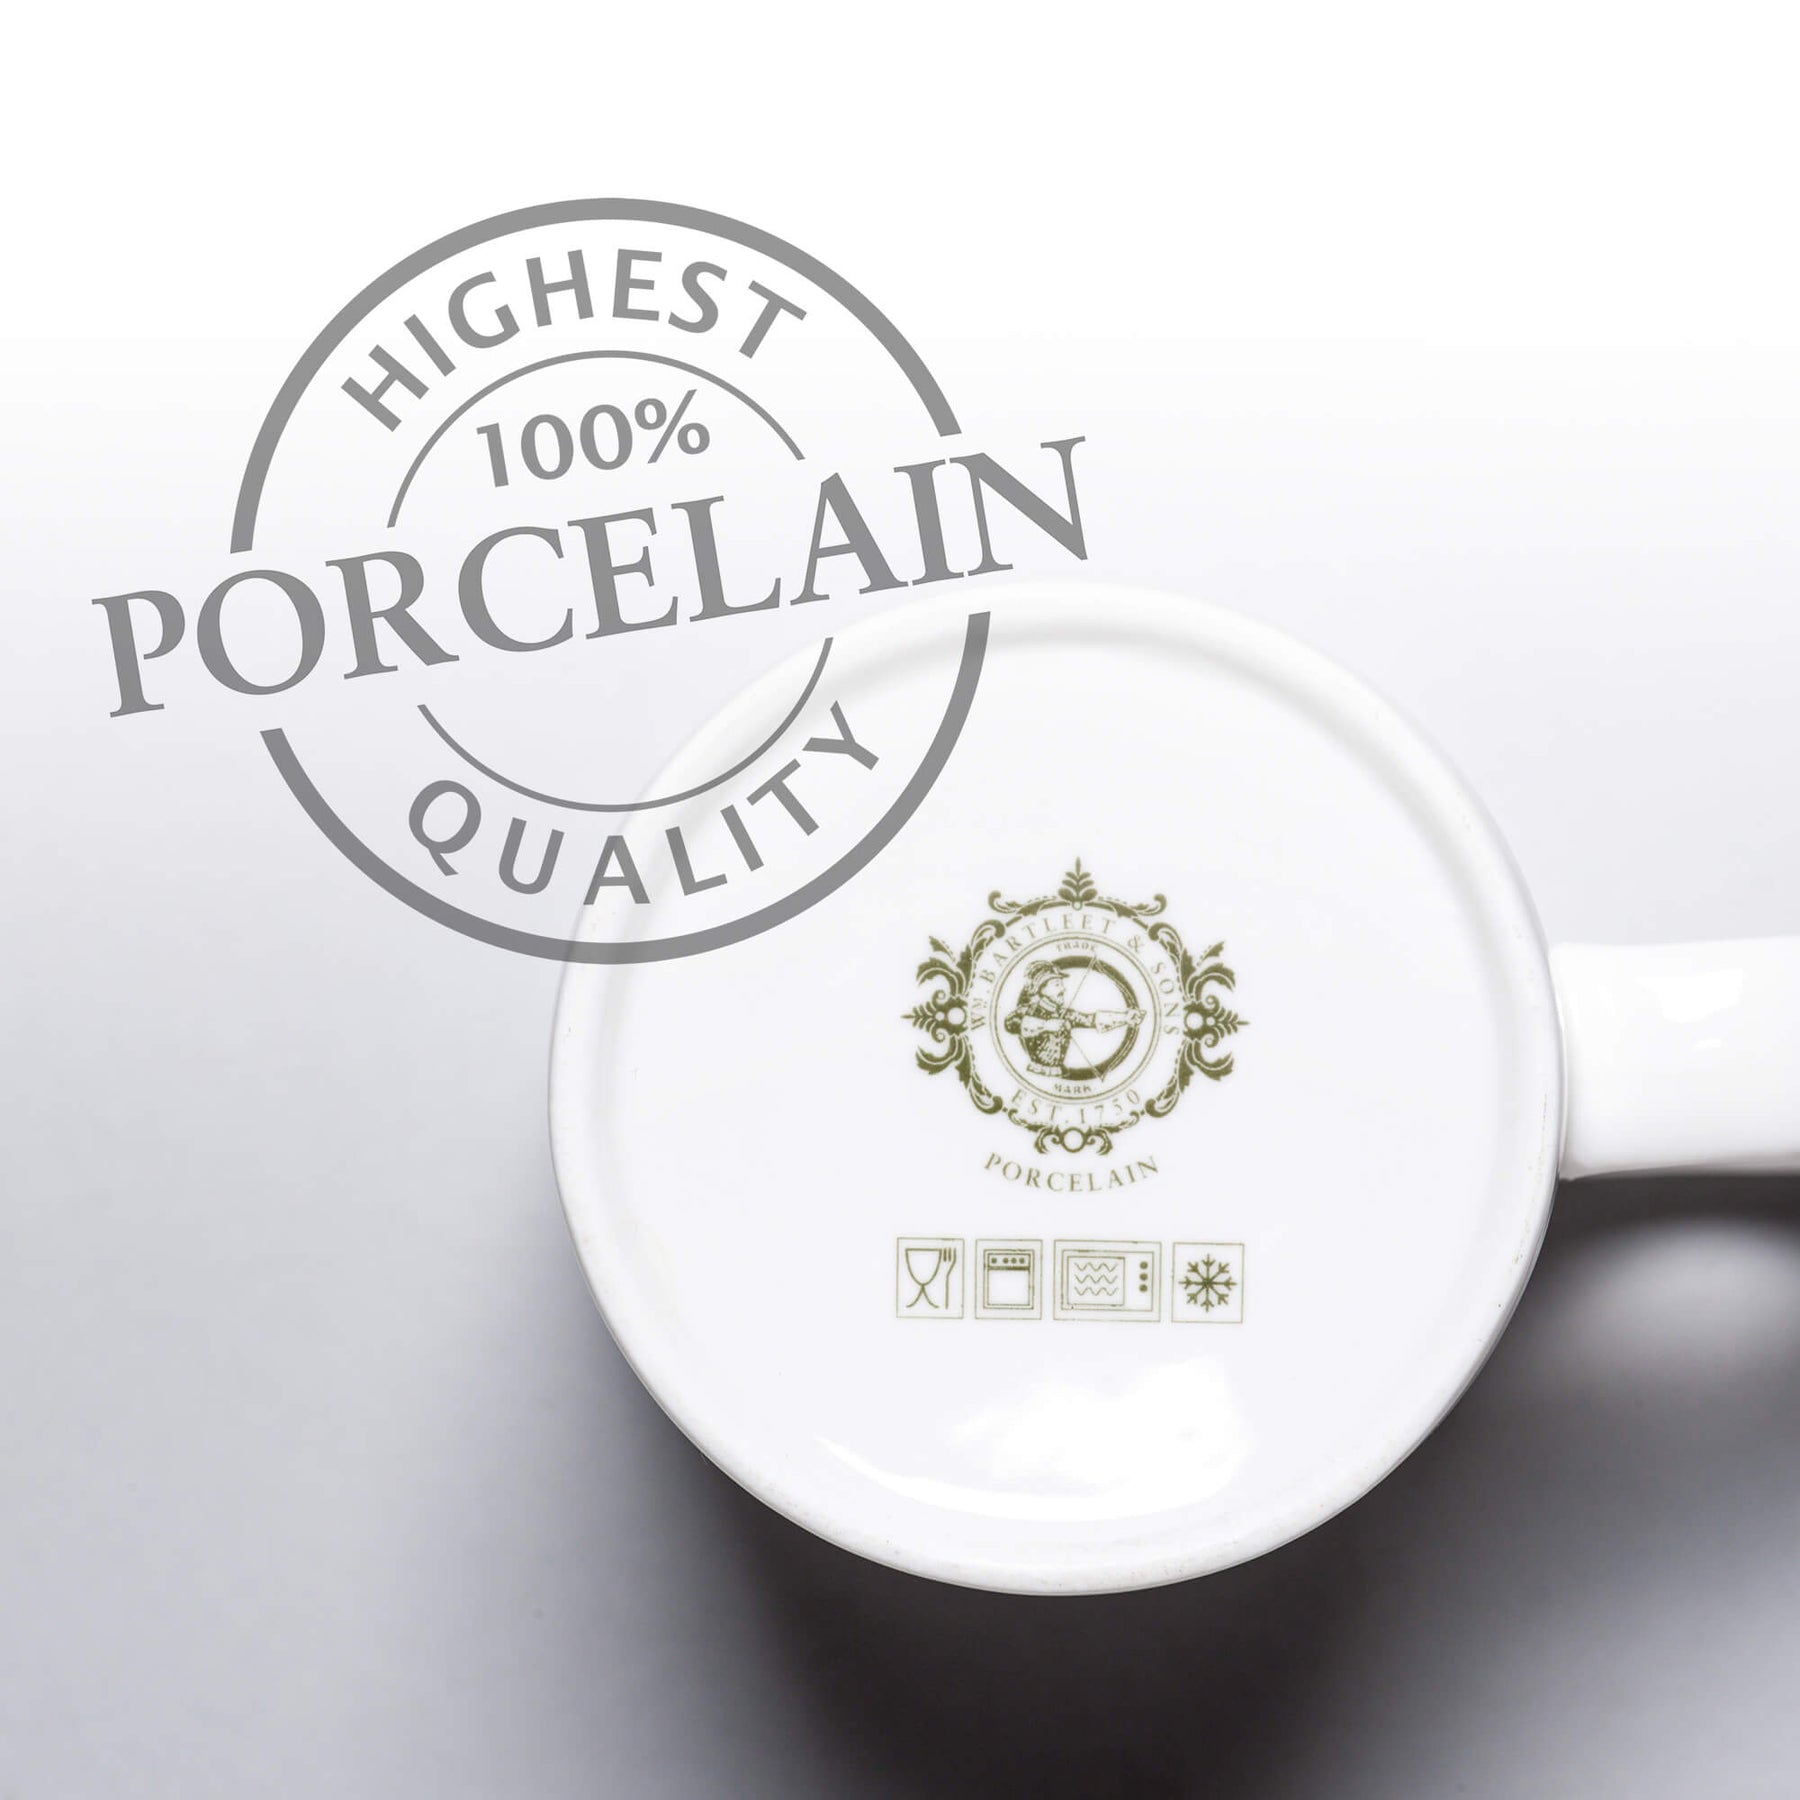 Porcelain Original Mug, 0.7 Pint, Set of 2